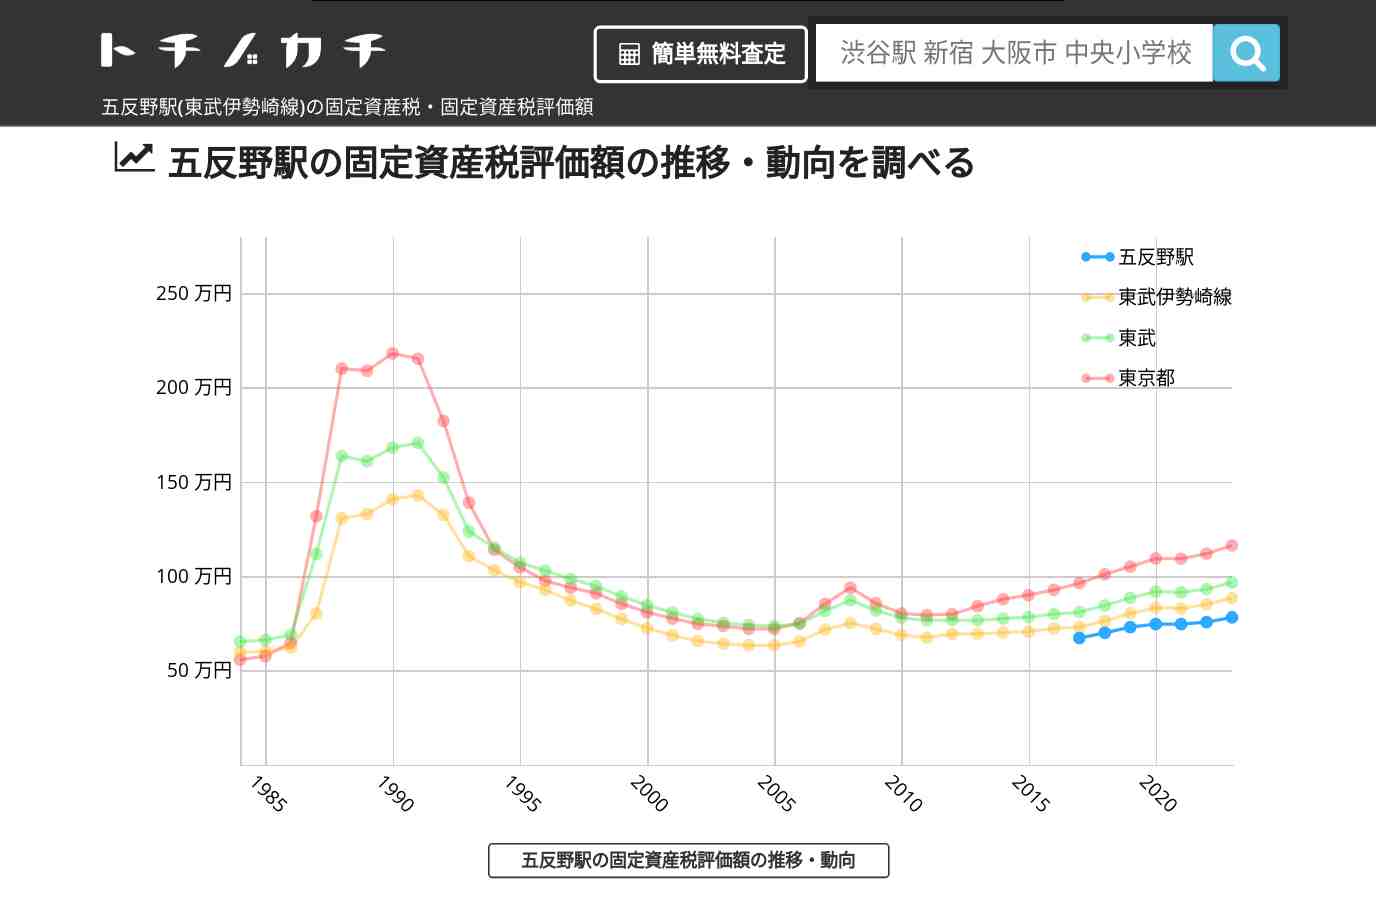 五反野駅(東武伊勢崎線)の固定資産税・固定資産税評価額 | トチノカチ